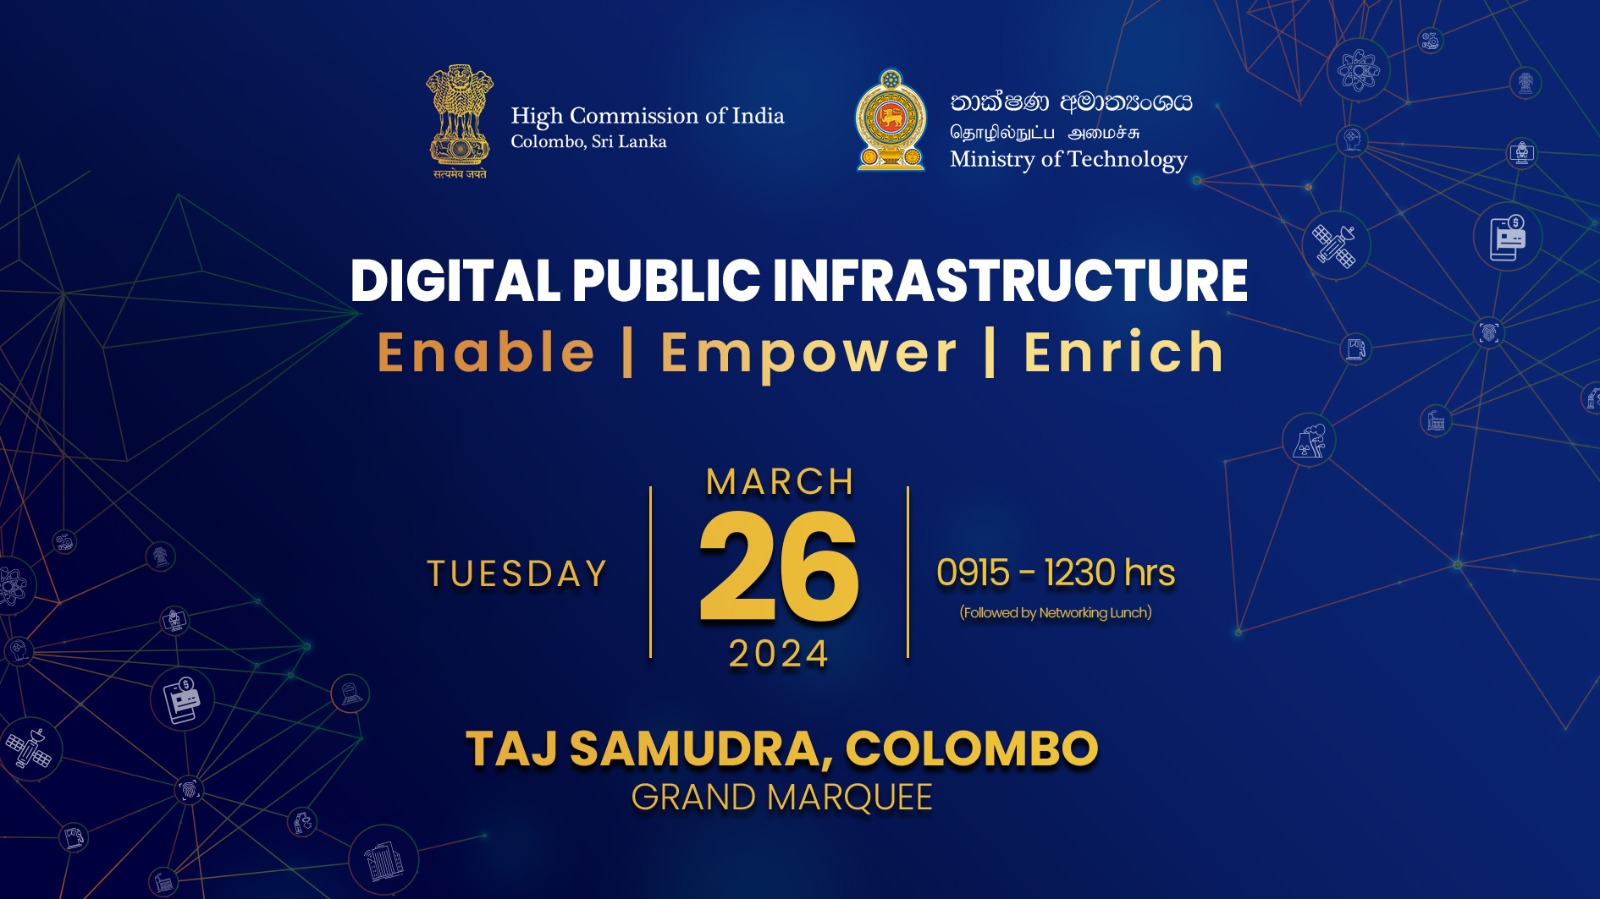 Catalyzing Digital Progress: Colombo Set to Host Landmark Conference on Inclusive Development Through Digital Public Infrastructure